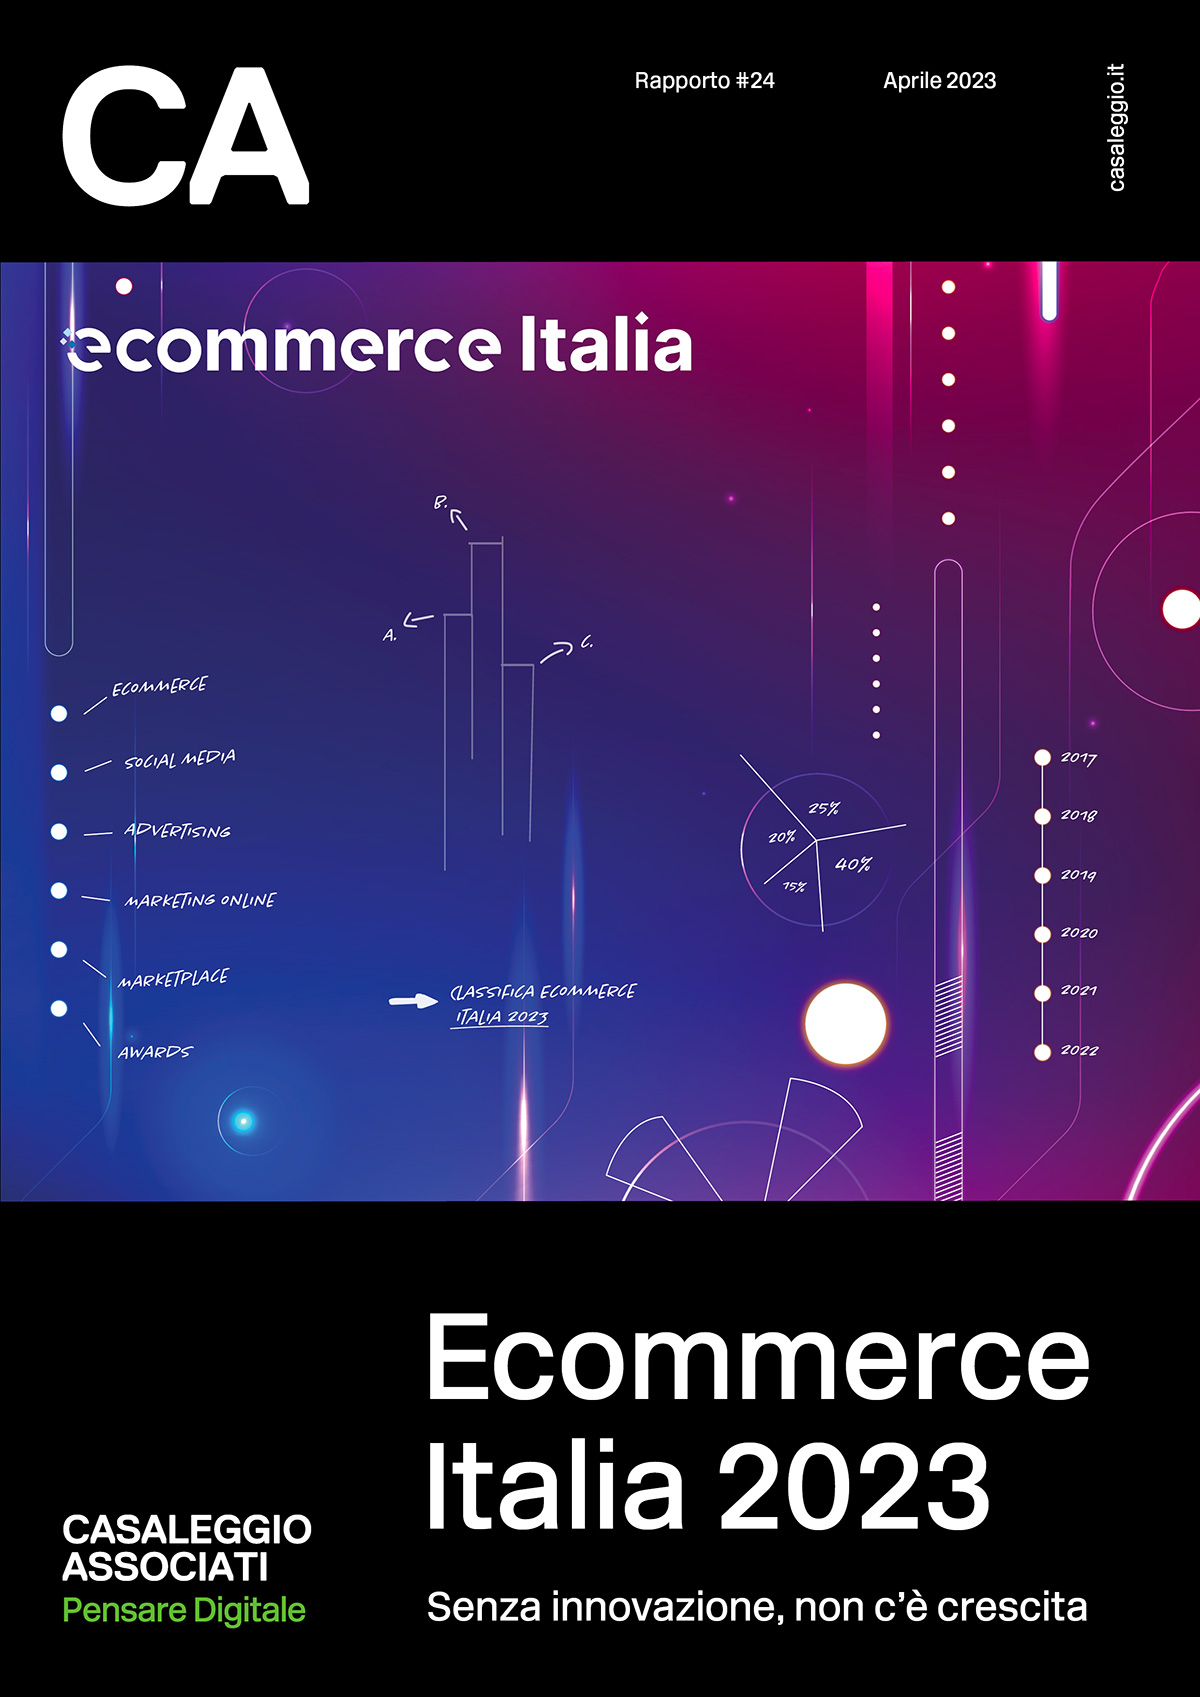 Ecommerce Italy 2023 - Report